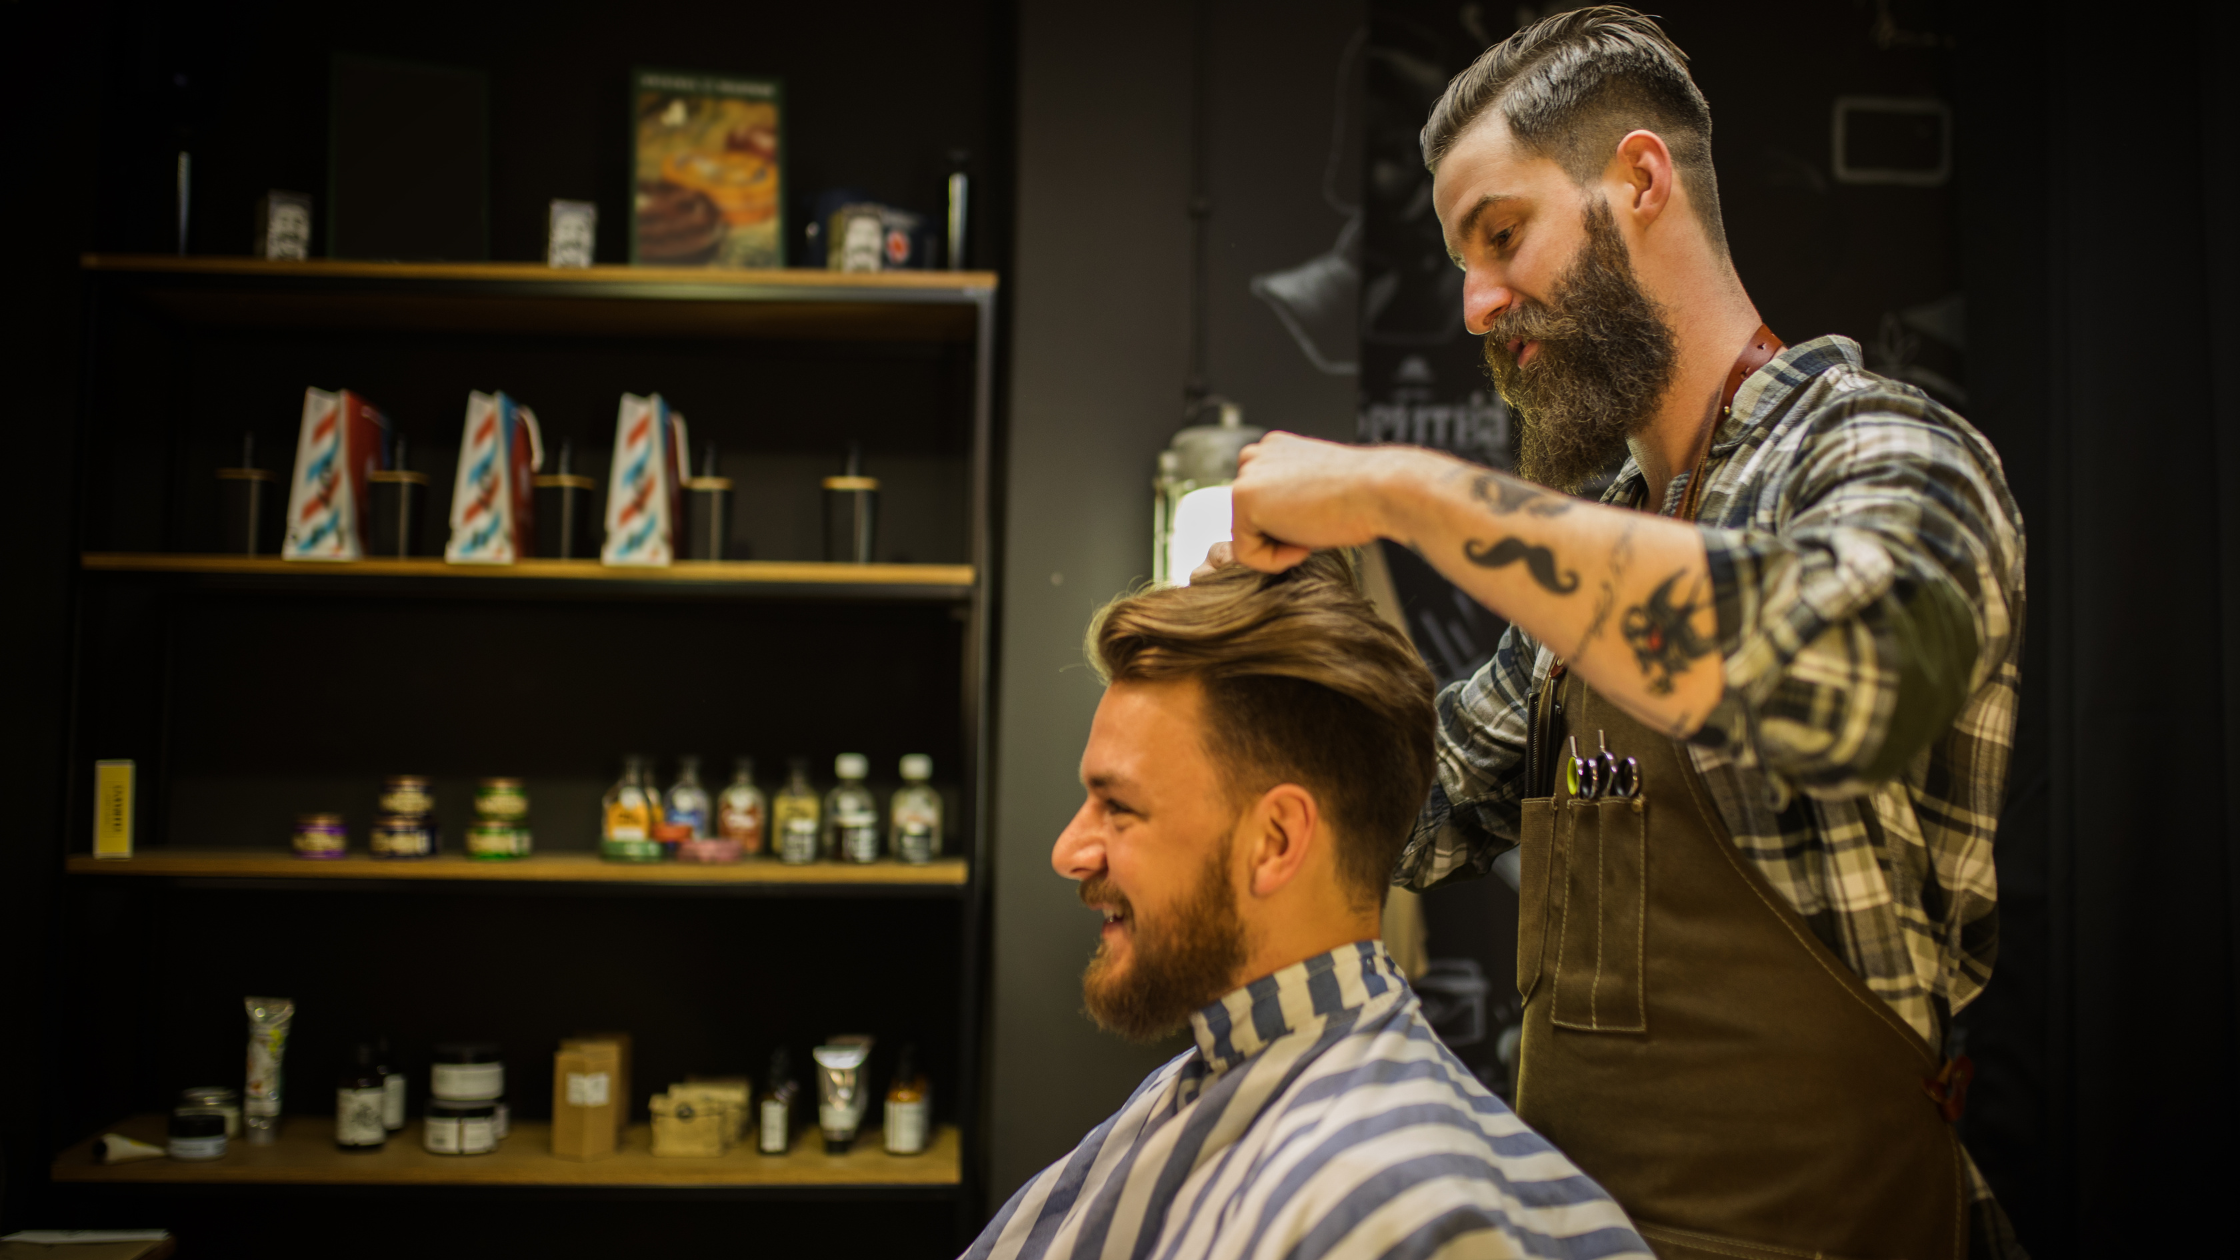 Tendência Corte Masculino 2019 – Barbearia O Barbeiro